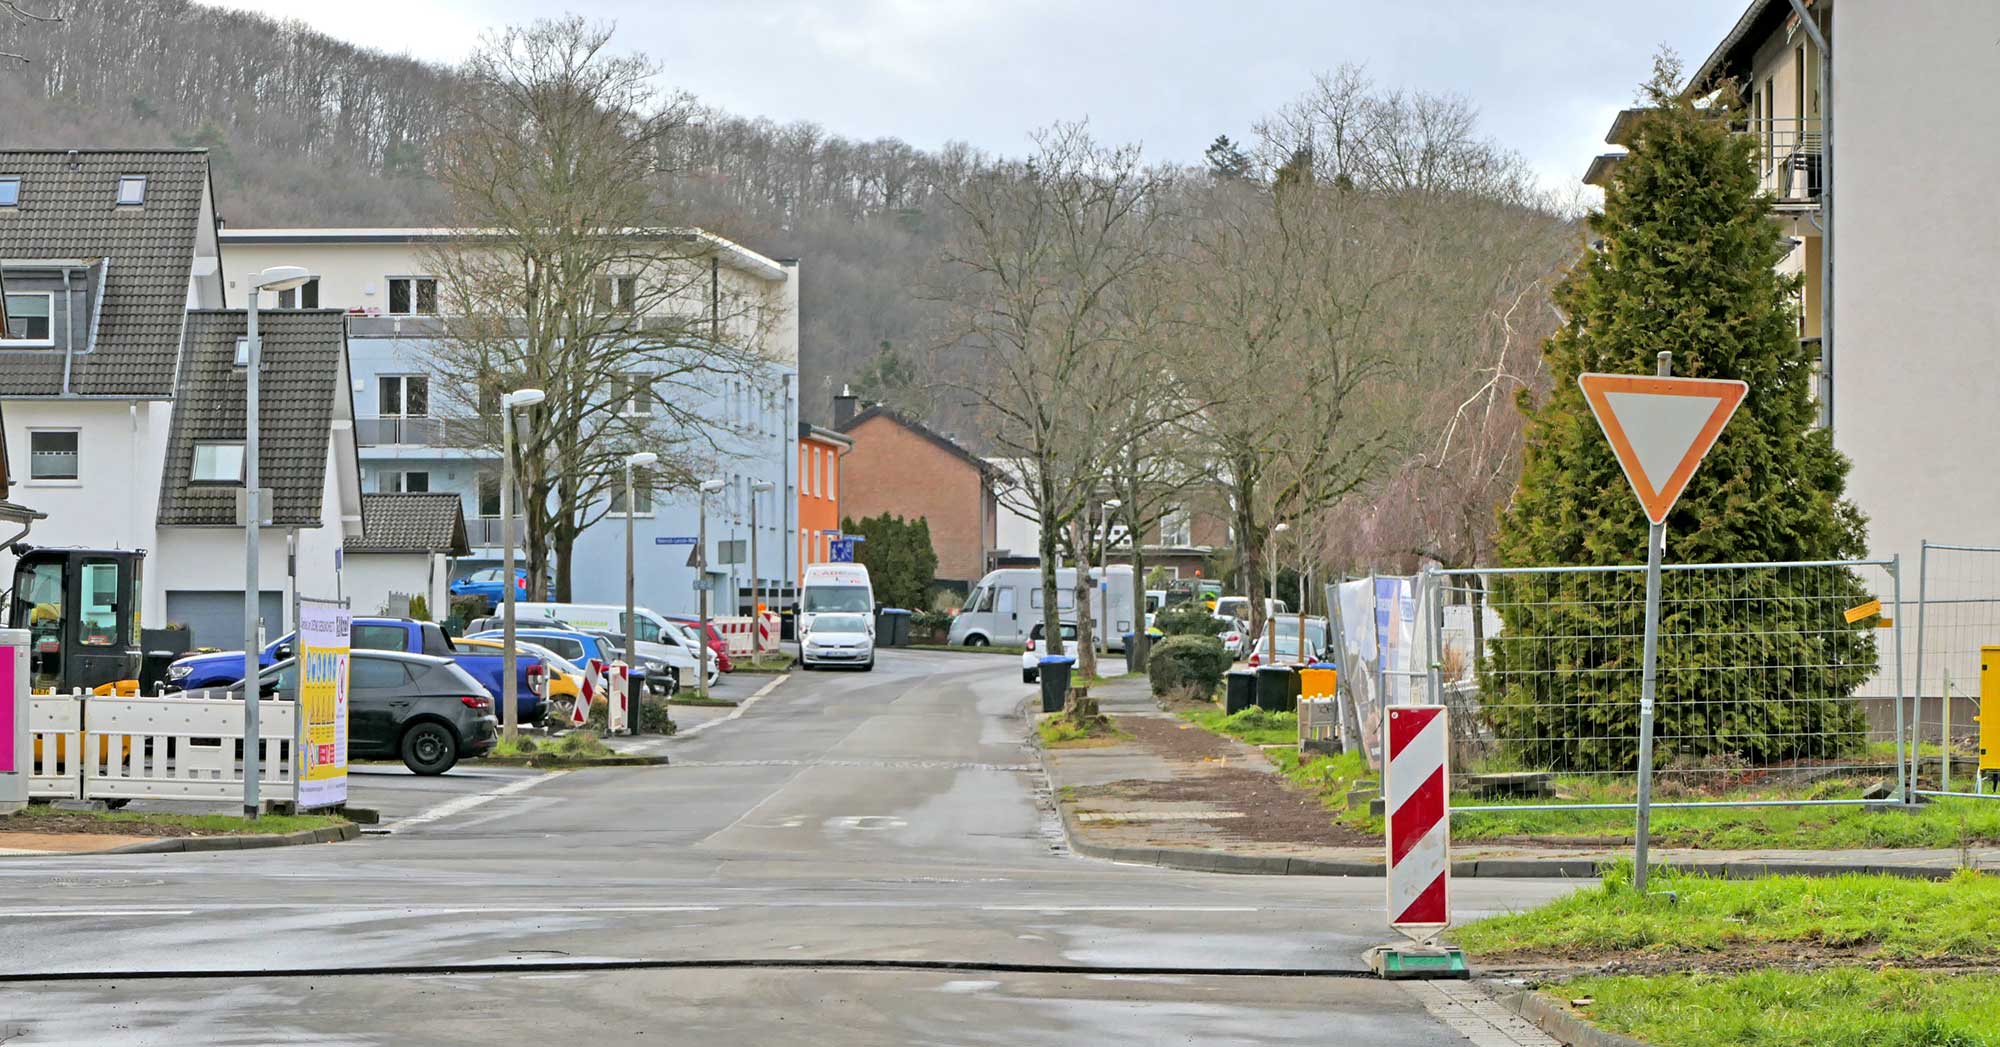 Josef-Hardt-Allee in Bad Bodendorf